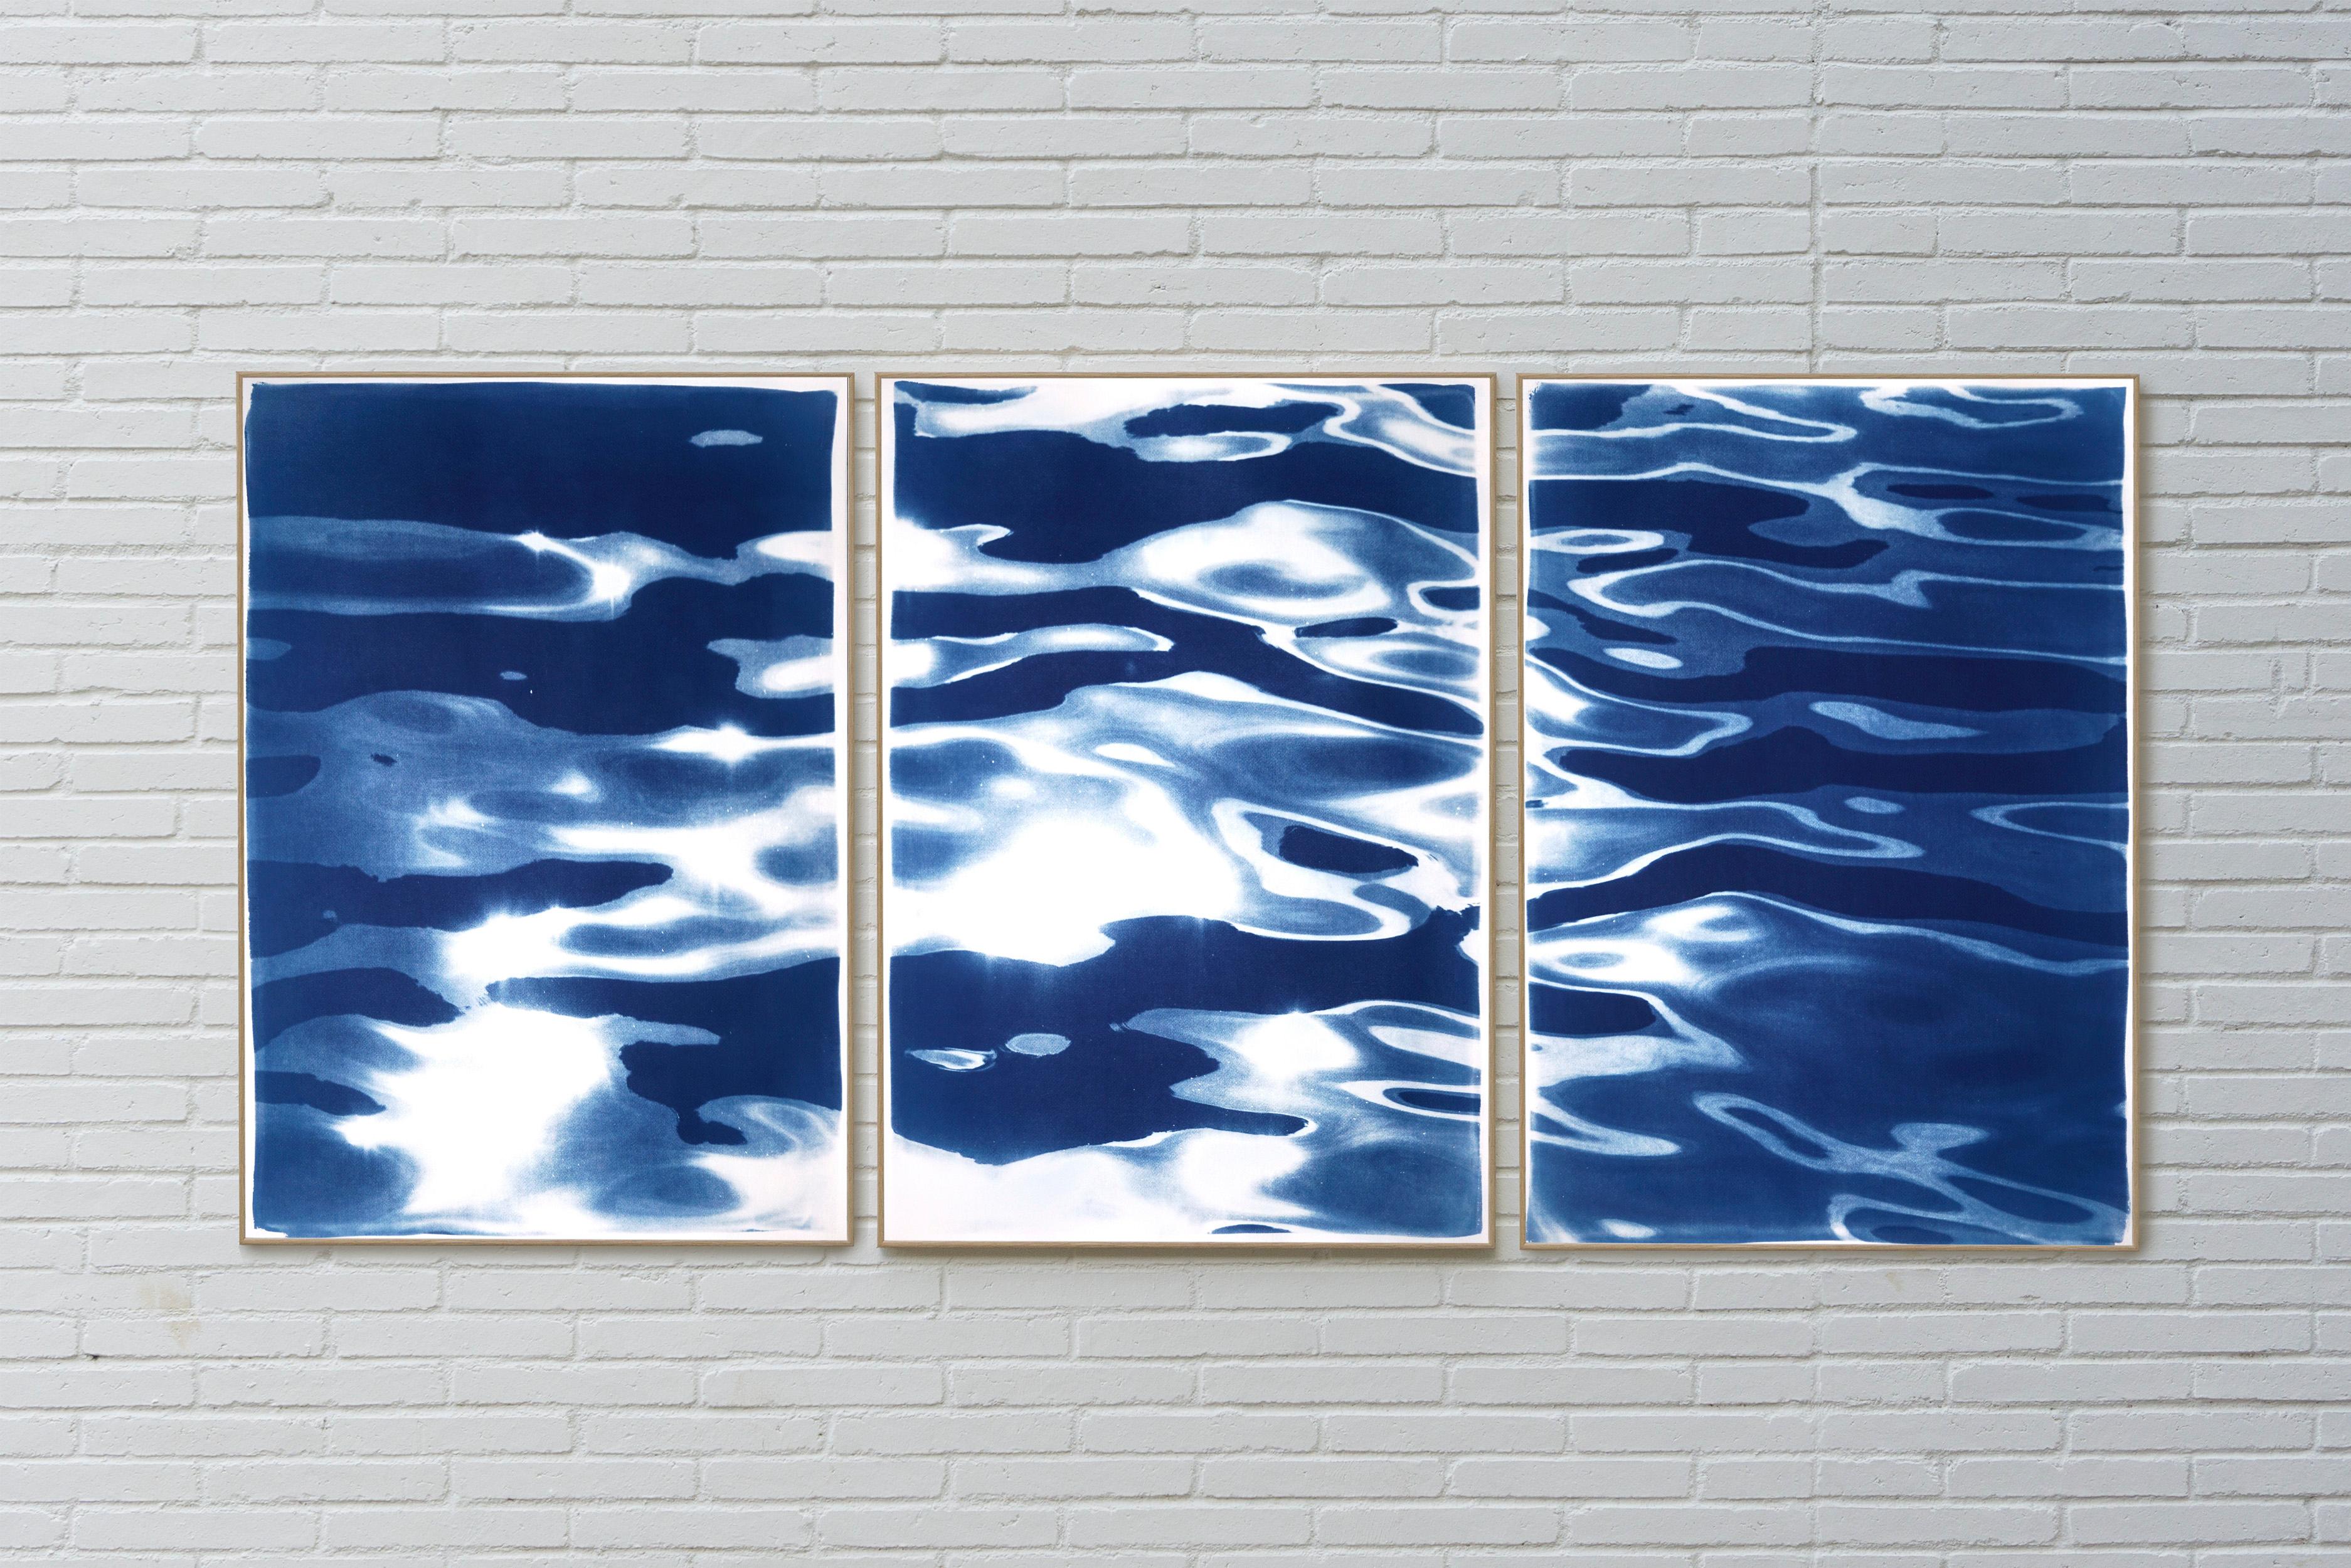 Venice Seascape Triptych, Blue Lido Island Reflections, Contemporary Cyanotype 2